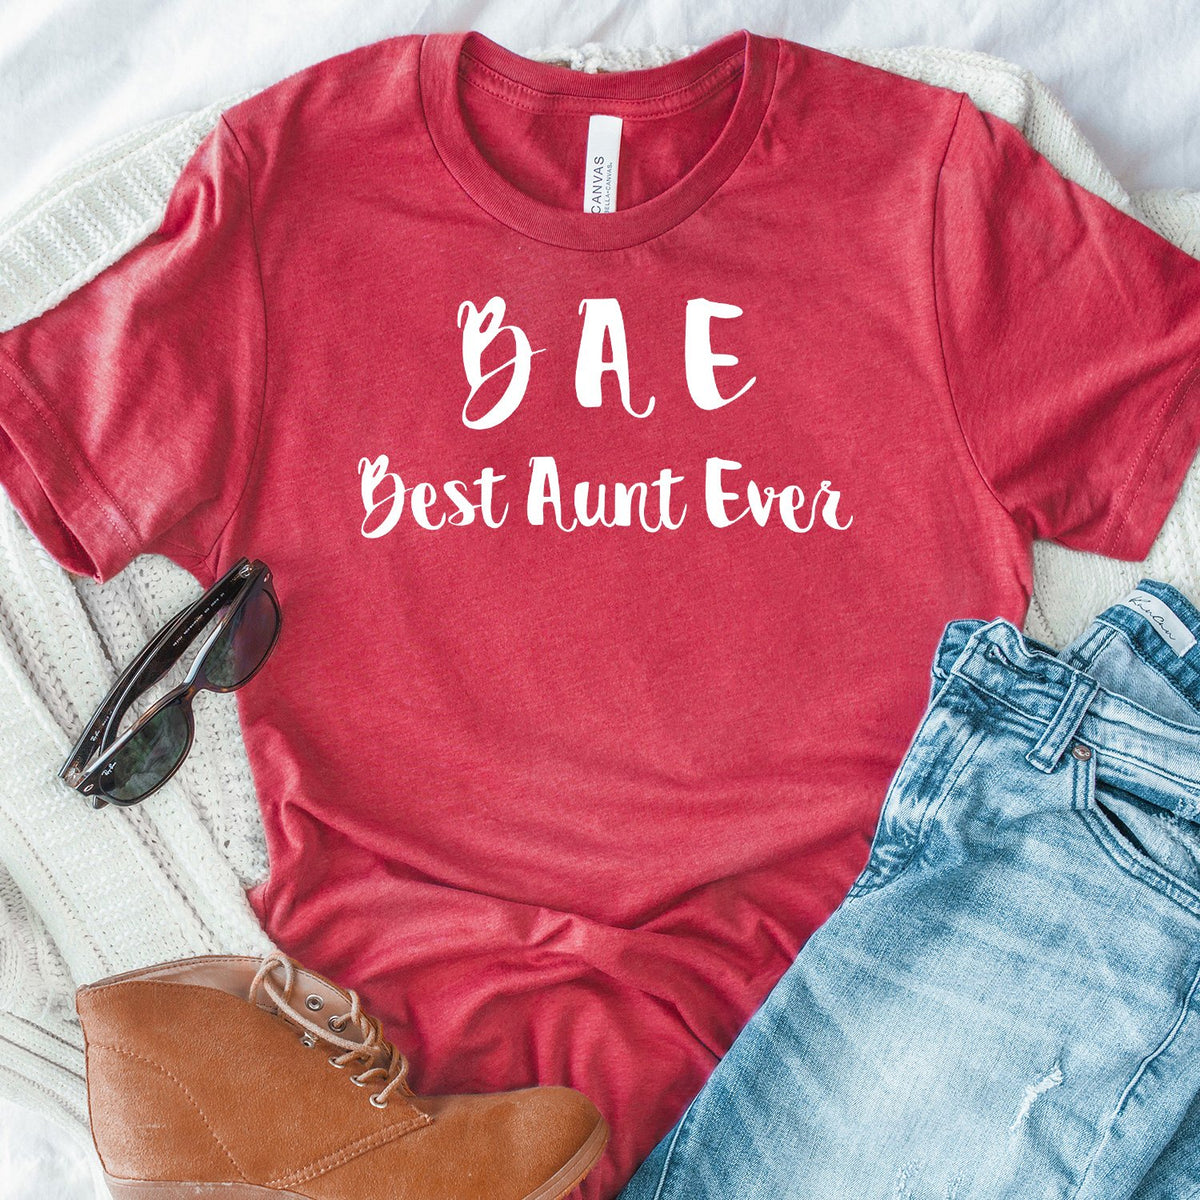 BAE Best Aunt Ever - Short Sleeve Tee Shirt